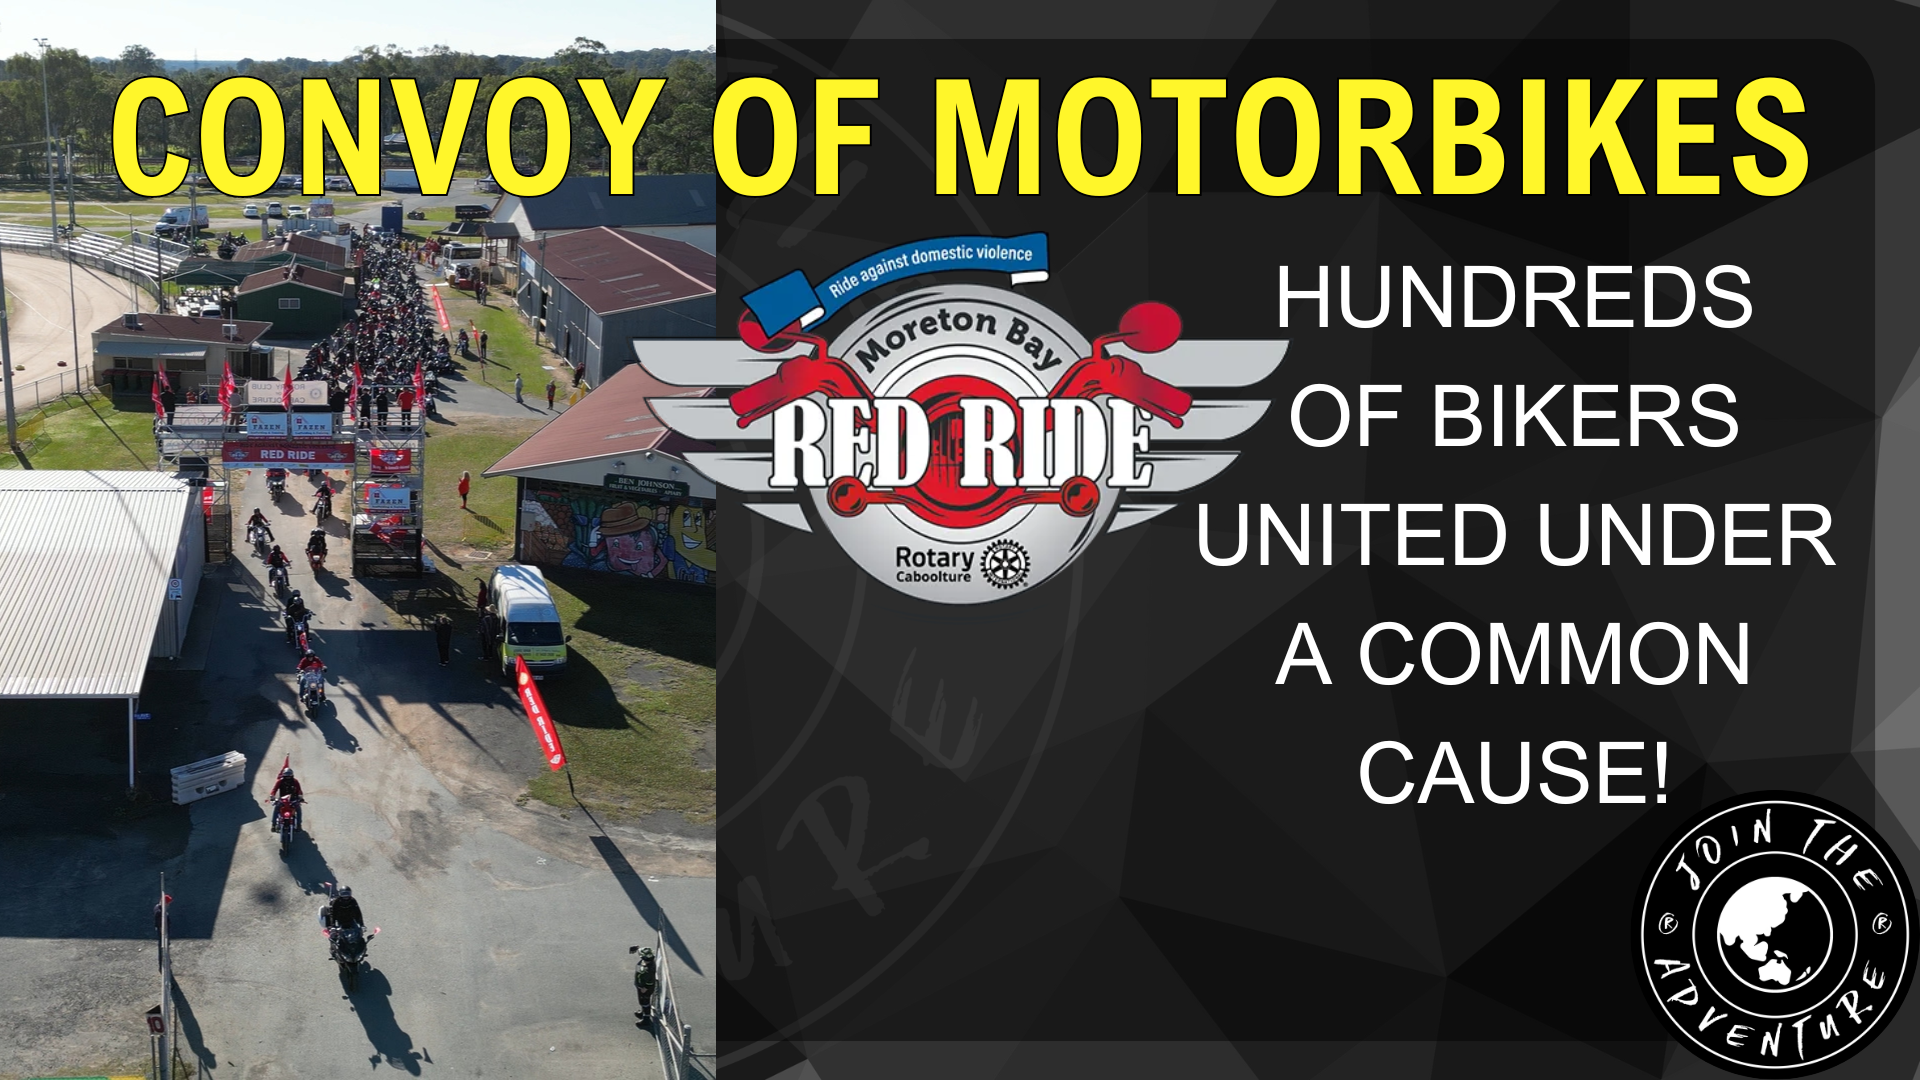 Red Ride, City of Moreton Bay